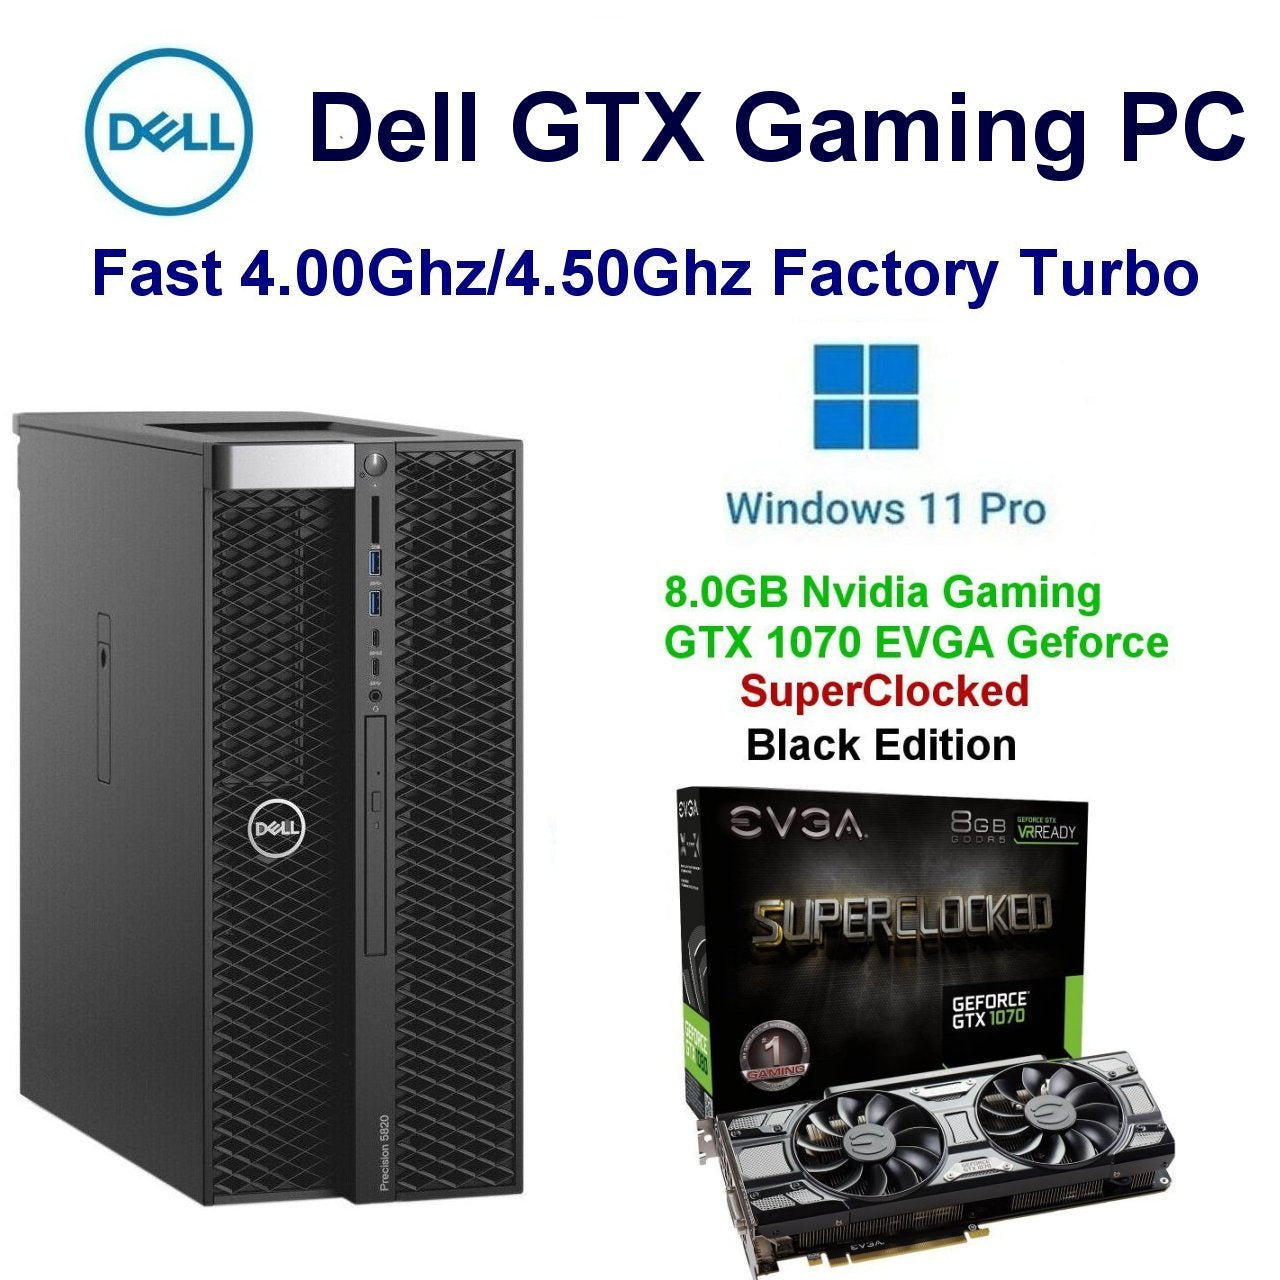 Fast 4.00Ghz-4.50Ghz Dell Precision 5820 256.0GB 3.0TB SSD 8.0GB Nvidia Geforce GTX Windows 11 Pro